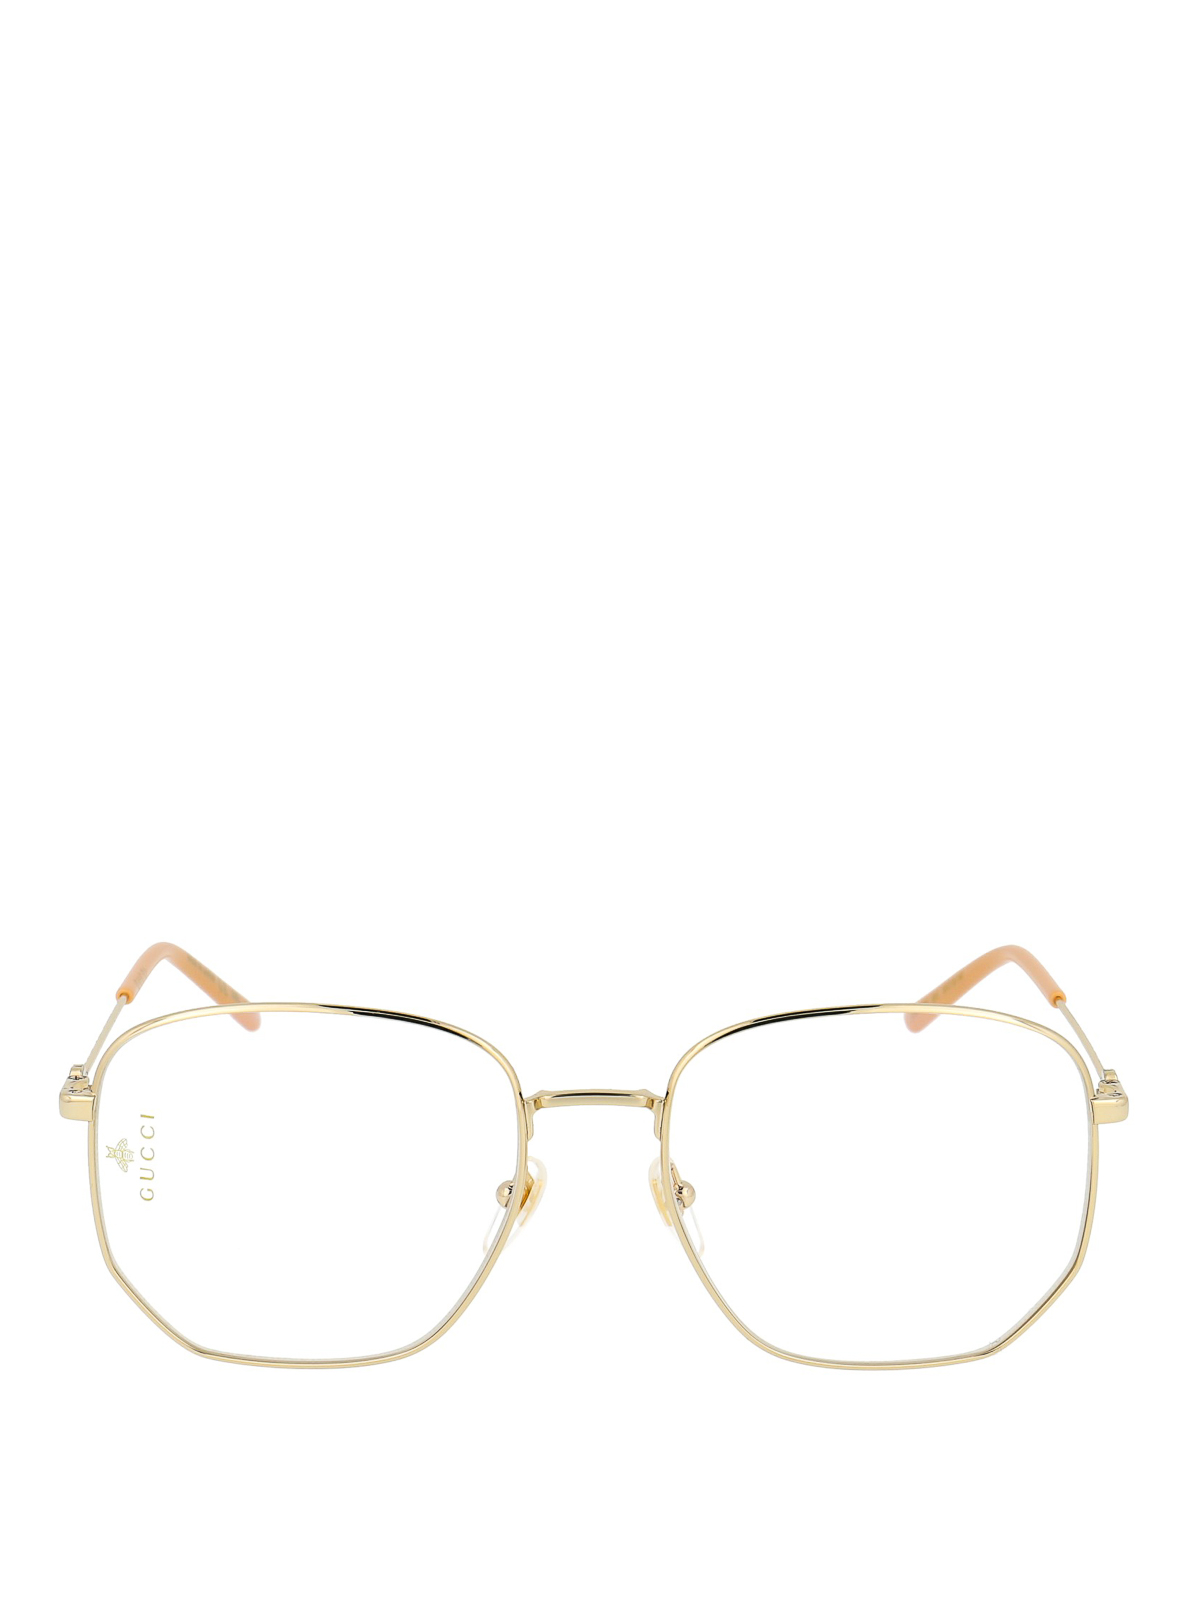 Glasses Gucci - eyeglasses - GG0396S001 online iKRIX